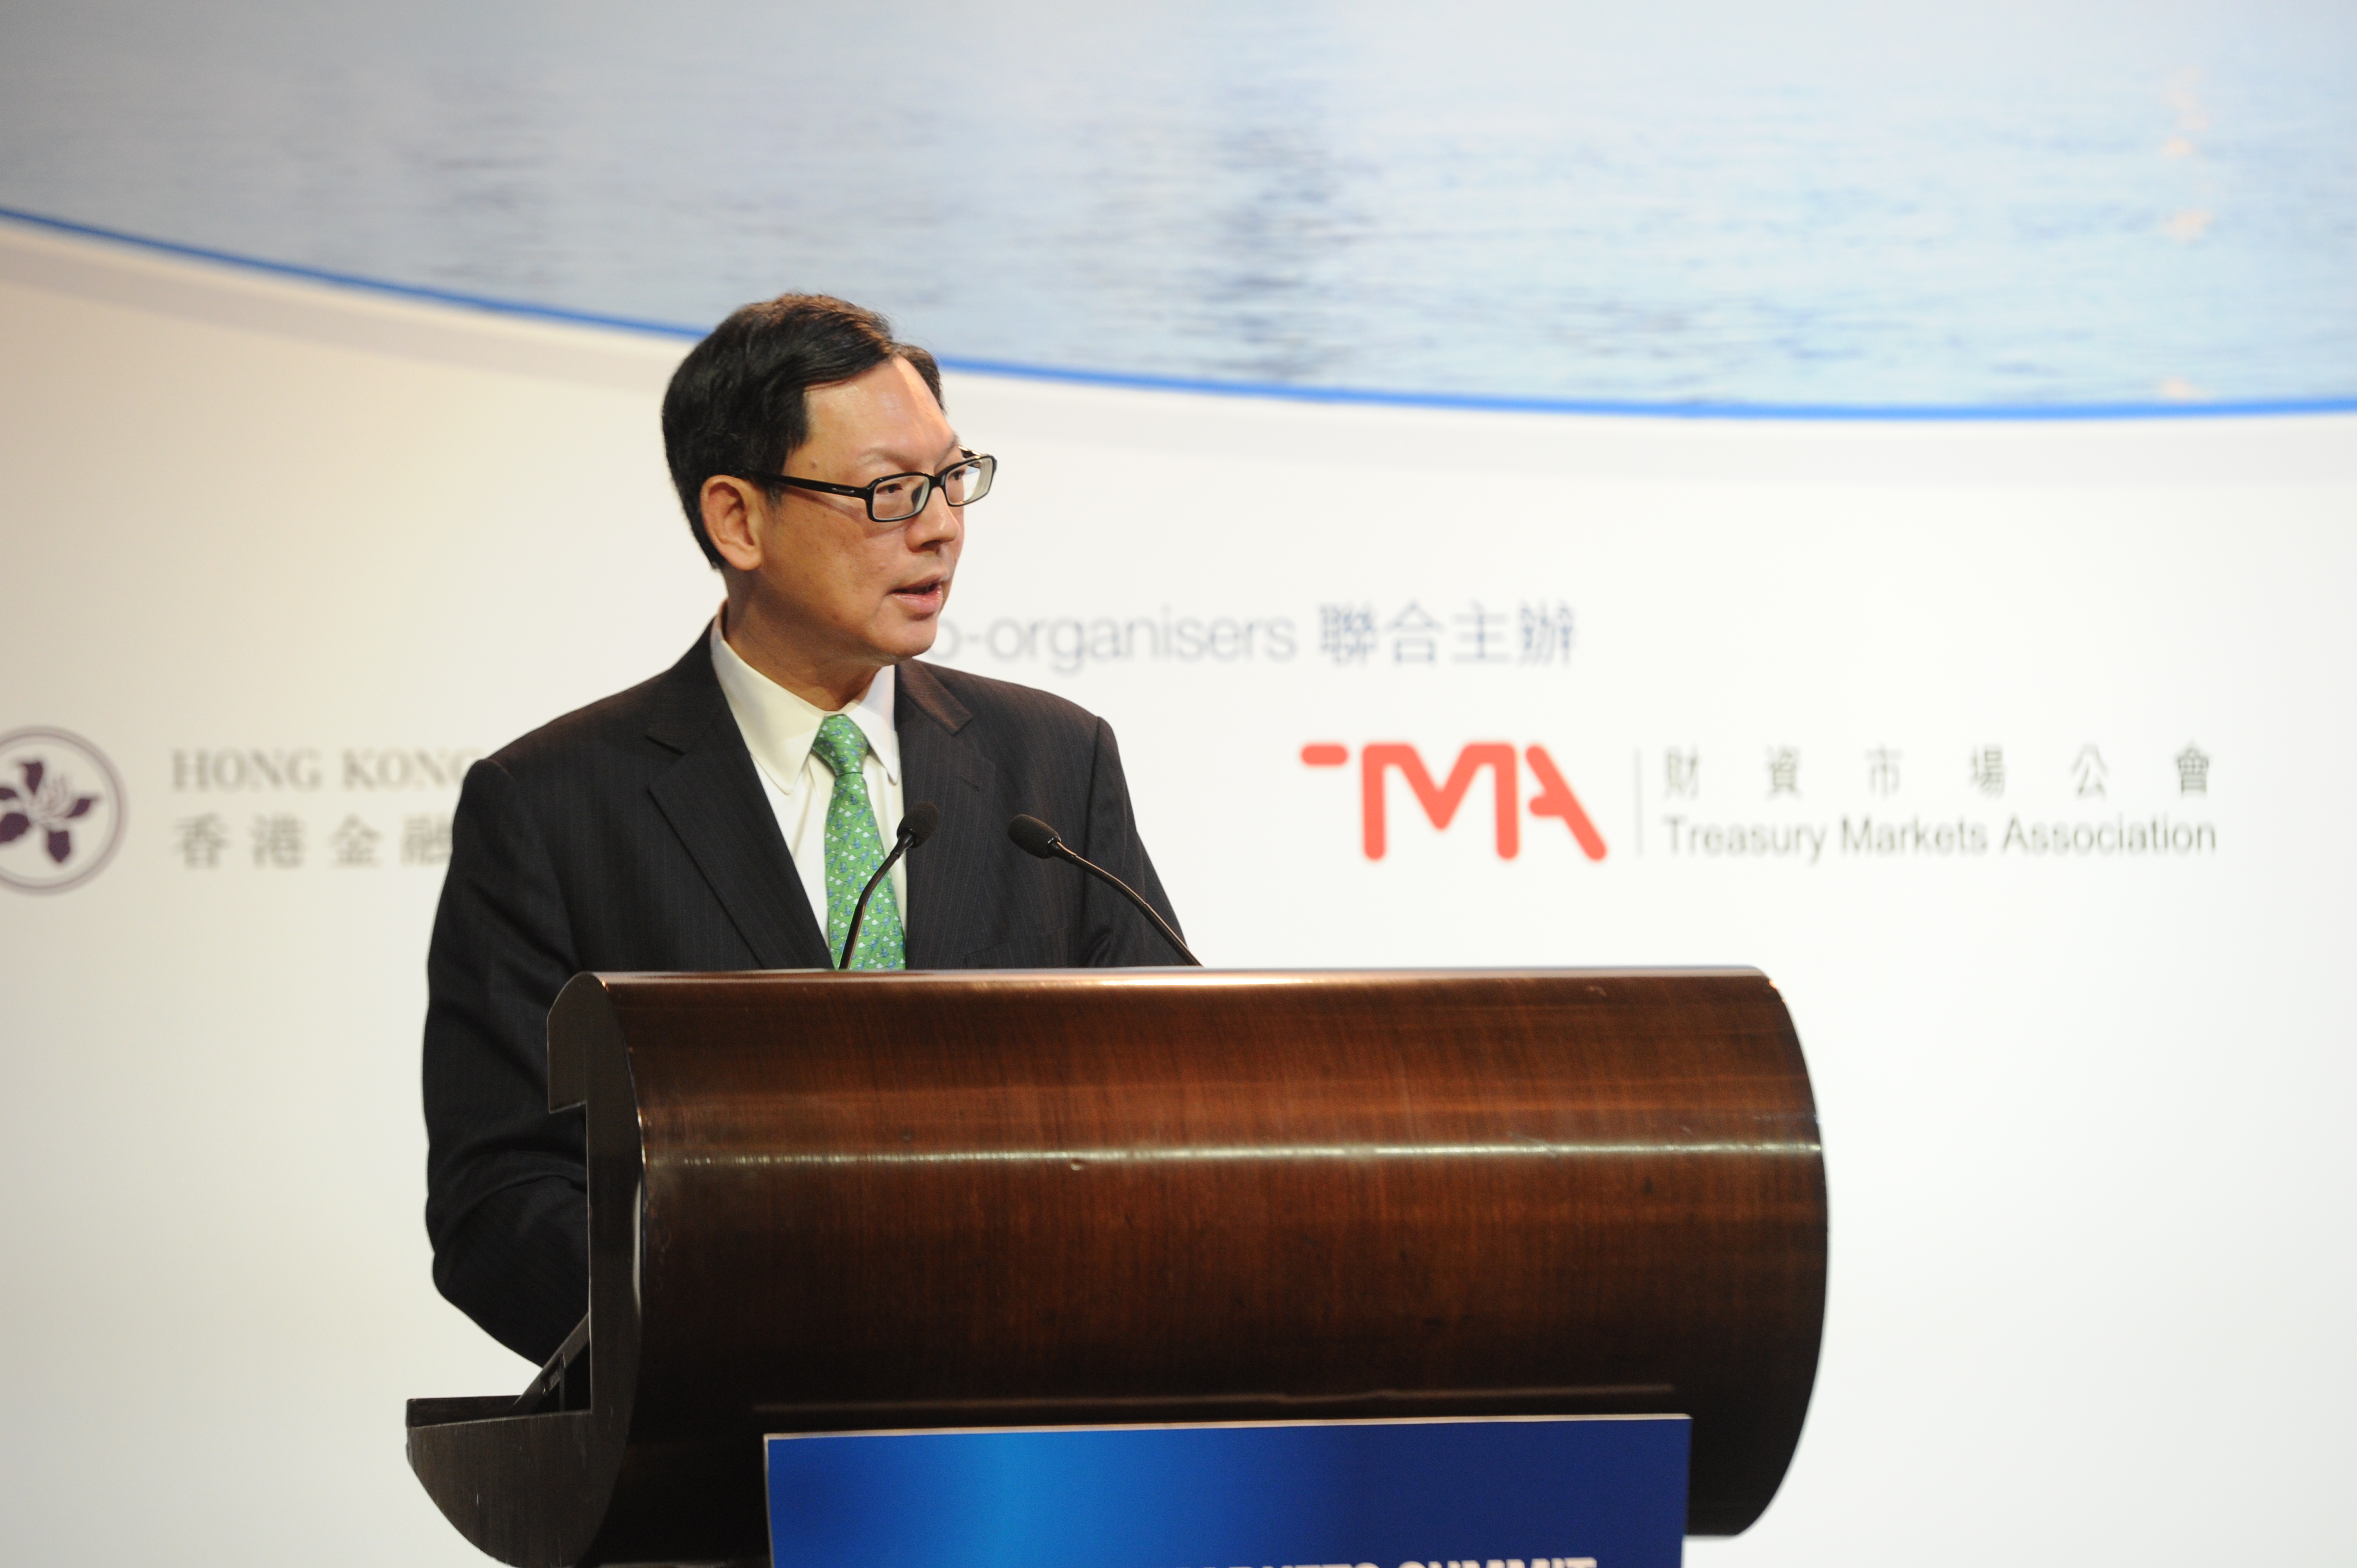 Mr Norman Chan, Chief Executive of the Hong Kong Monetary Authority, gives the keynote speech at the Treasury Markets Summit 2013 held in Hong Kong.